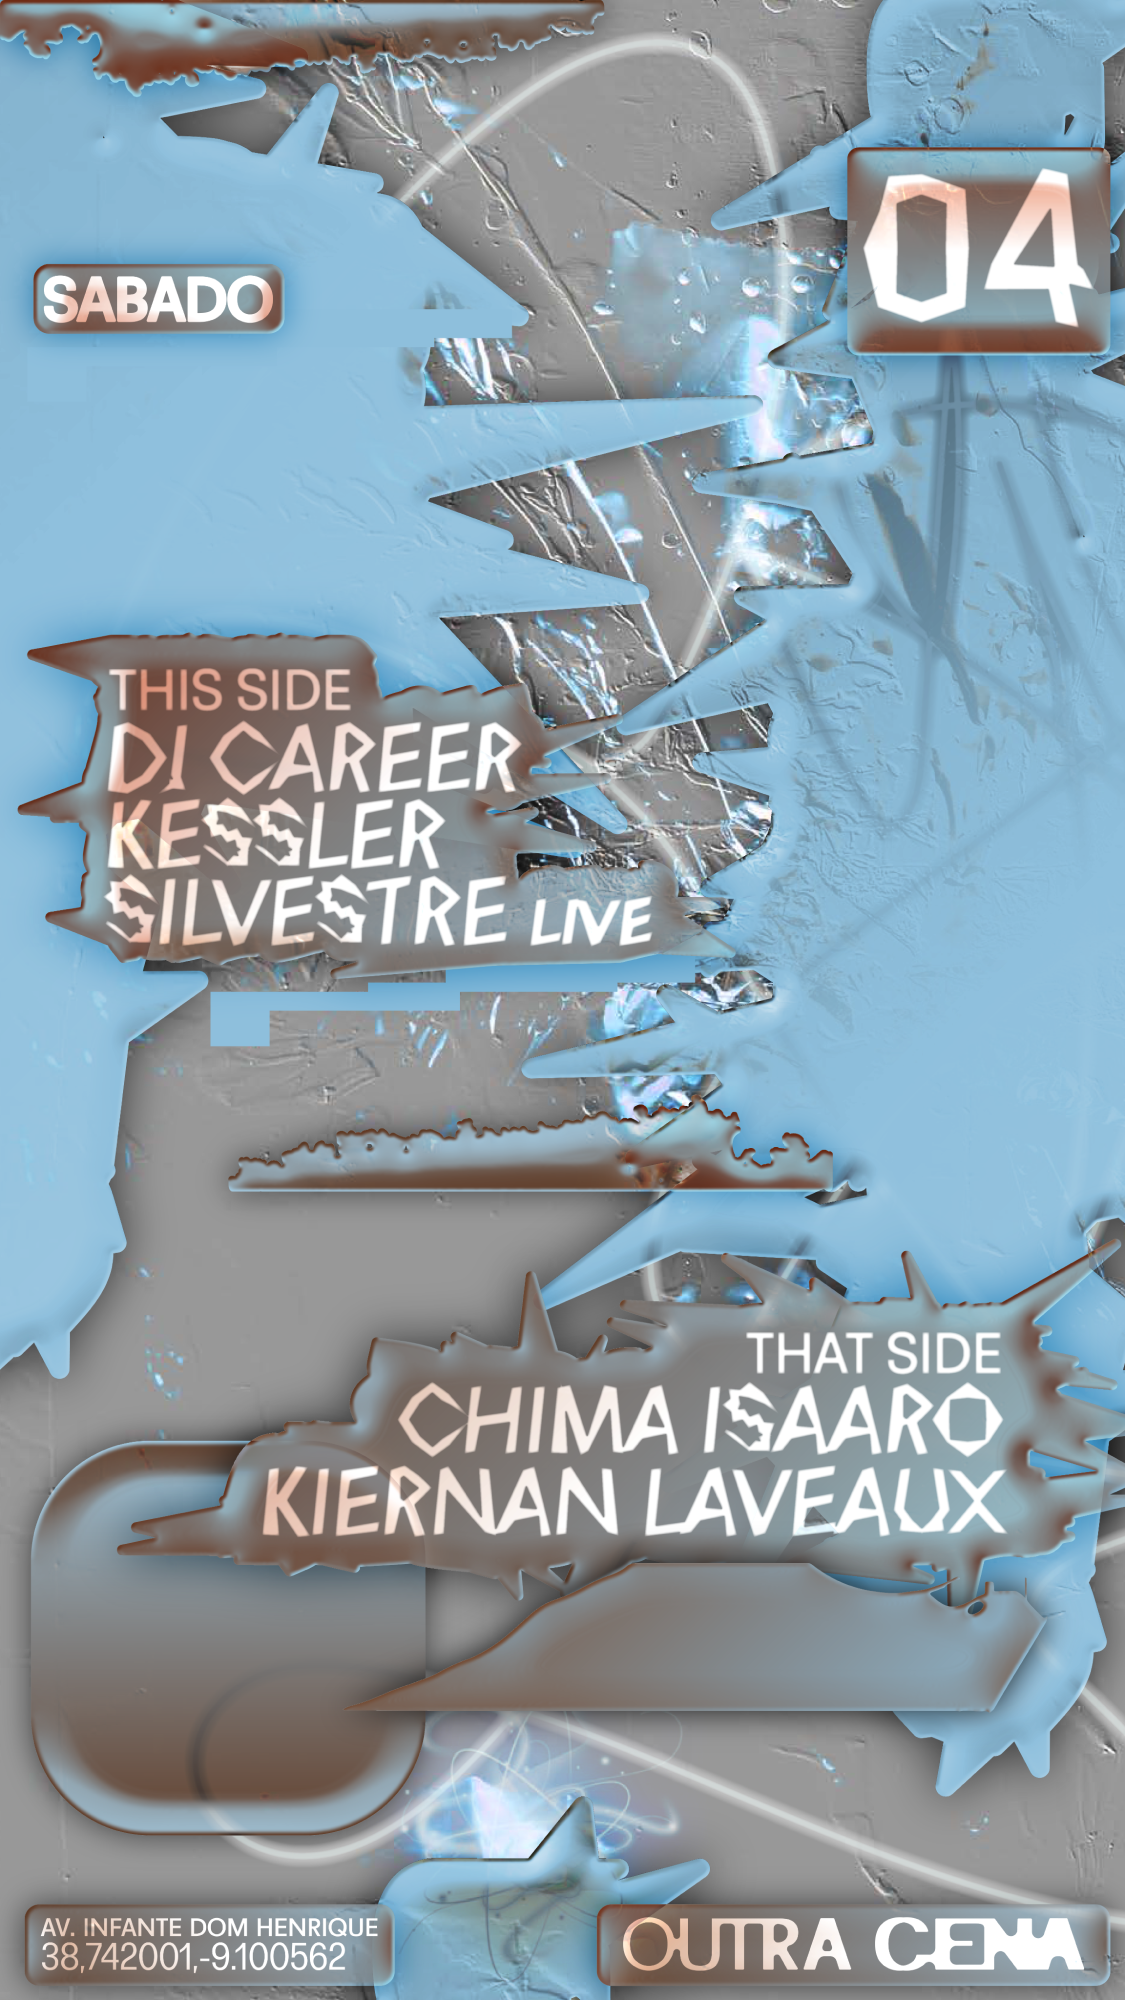 Chima Isaaro, DJ Career, Kessler, Kiernan Laveaux, Silvestre live - Página frontal